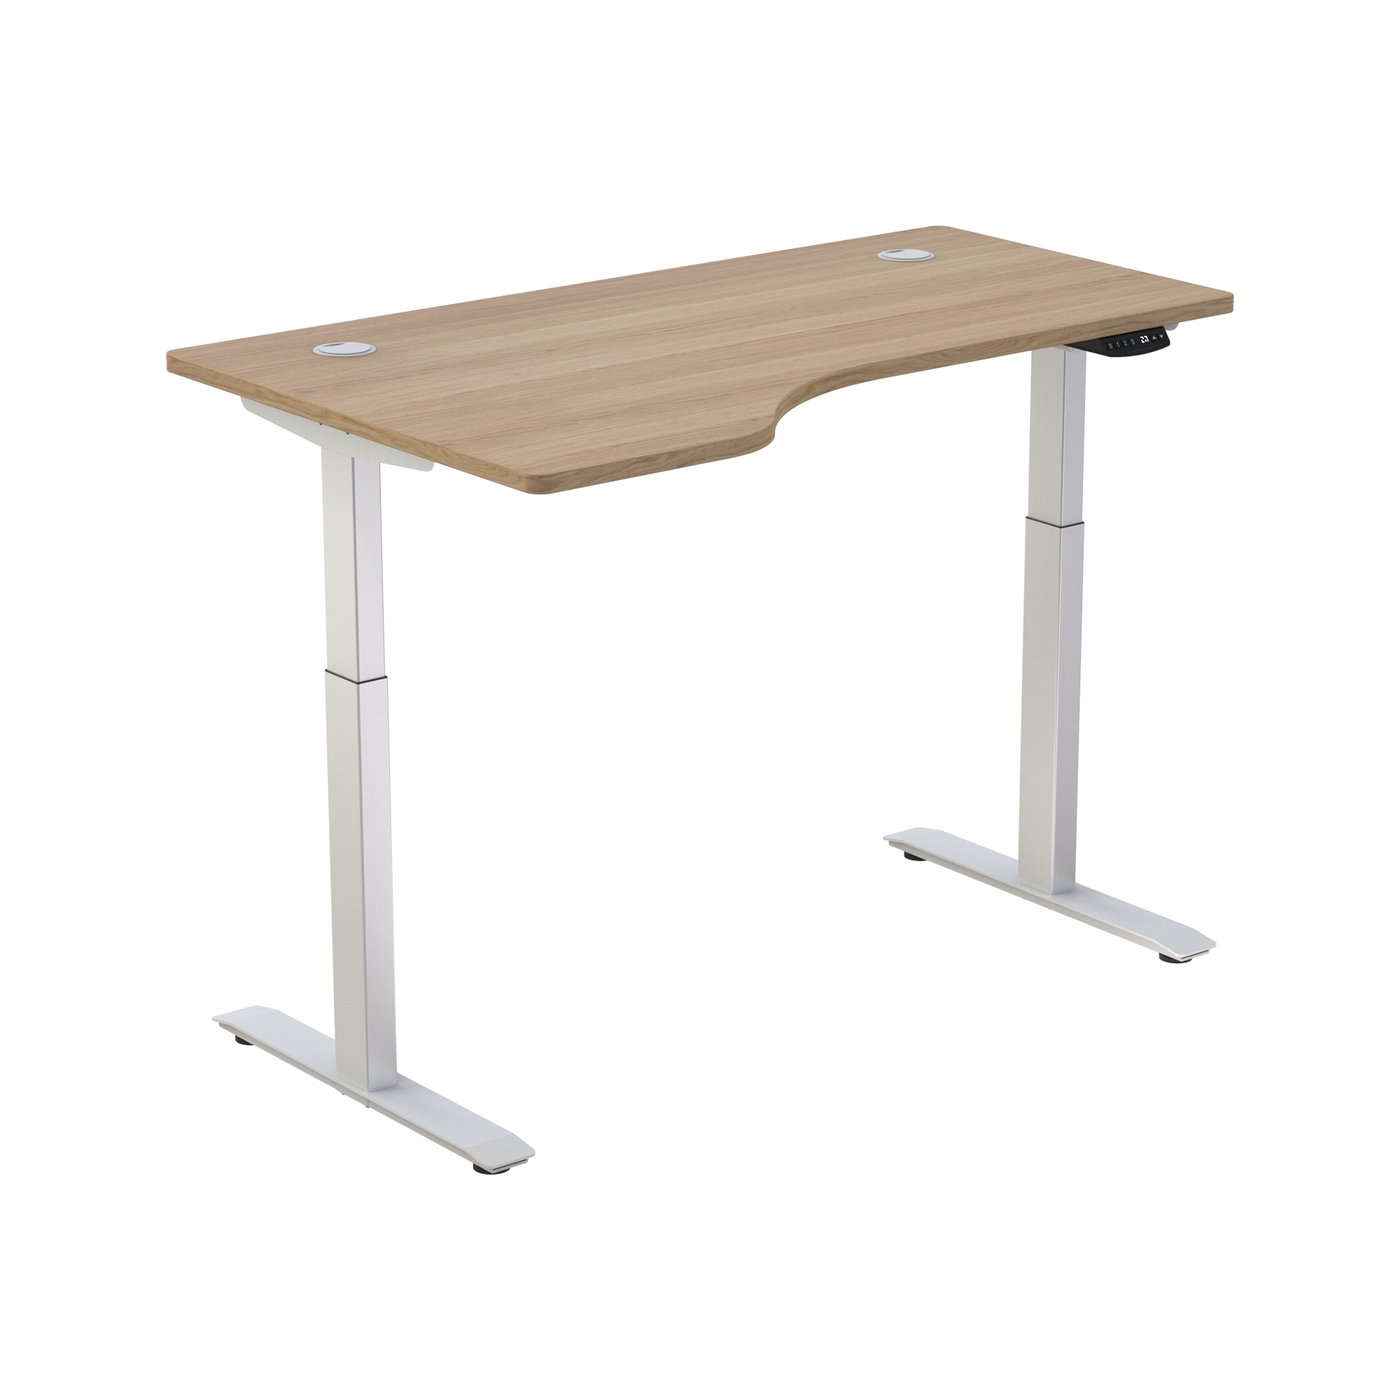 Bella Electric Height Adjustable Left Handed Standing Desks (55"x33") for Home Office Workstation with 4 Color Option